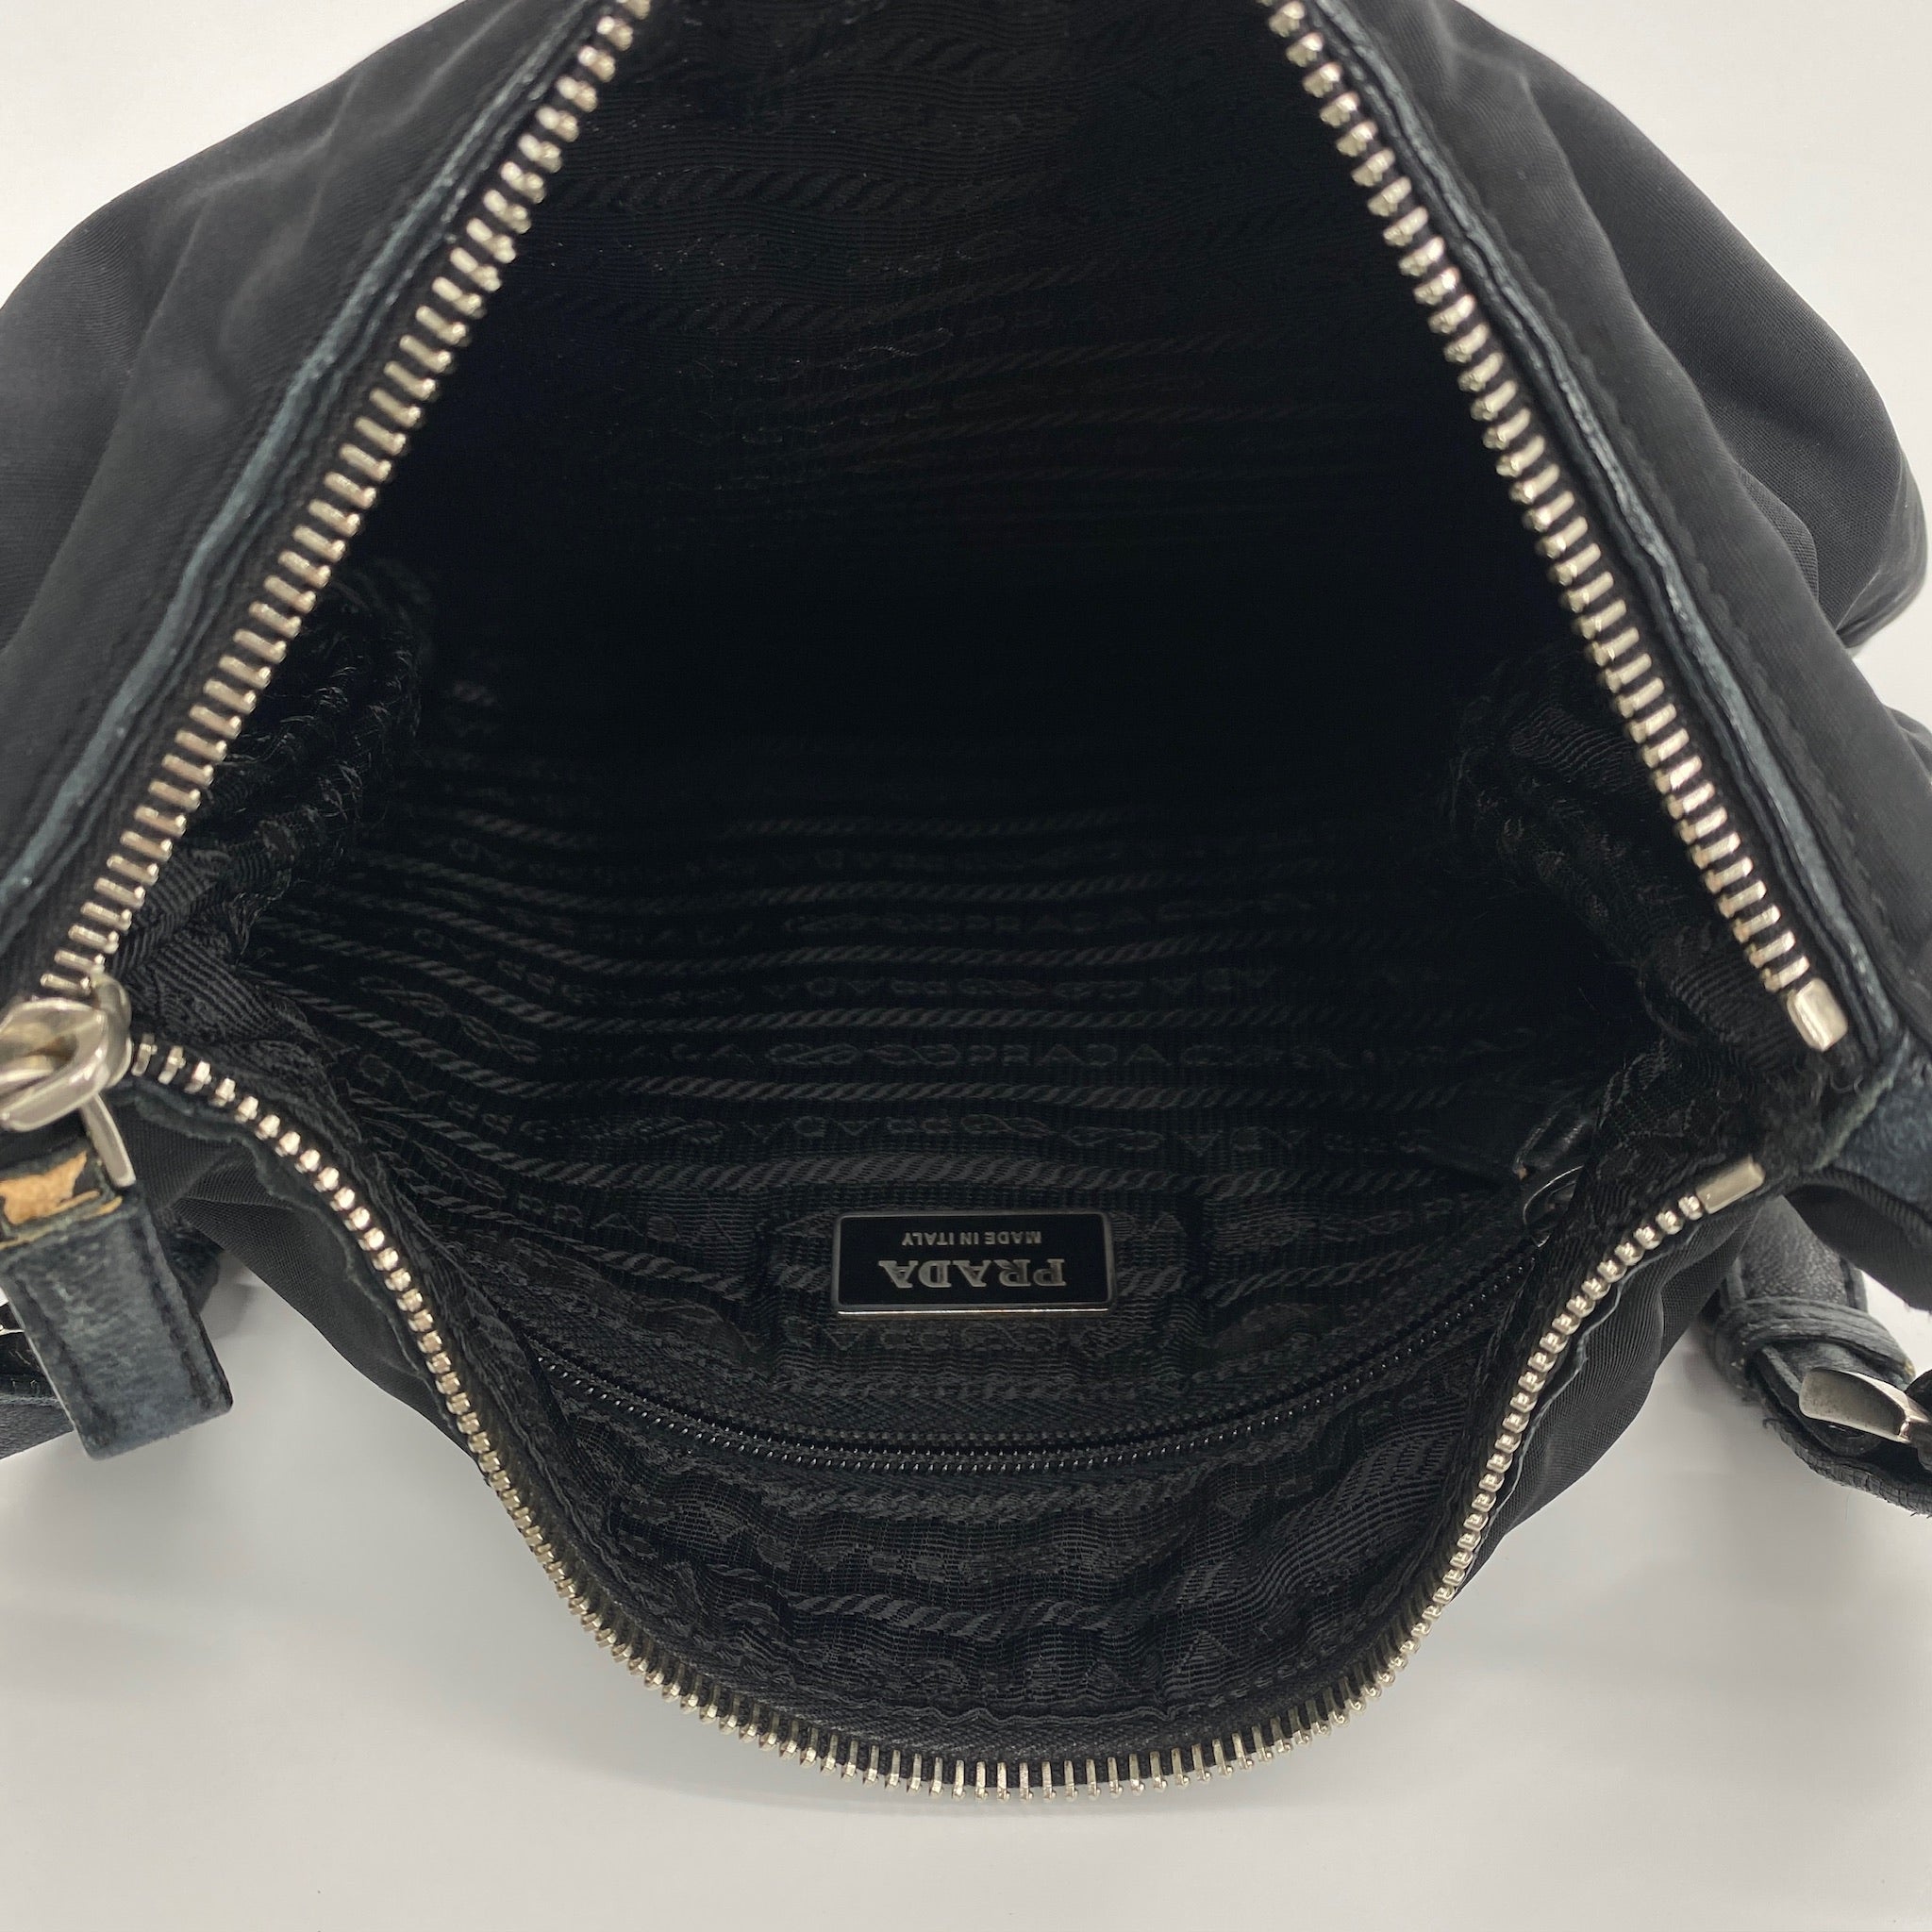 Nylon Hobo Shoulder Bag Black